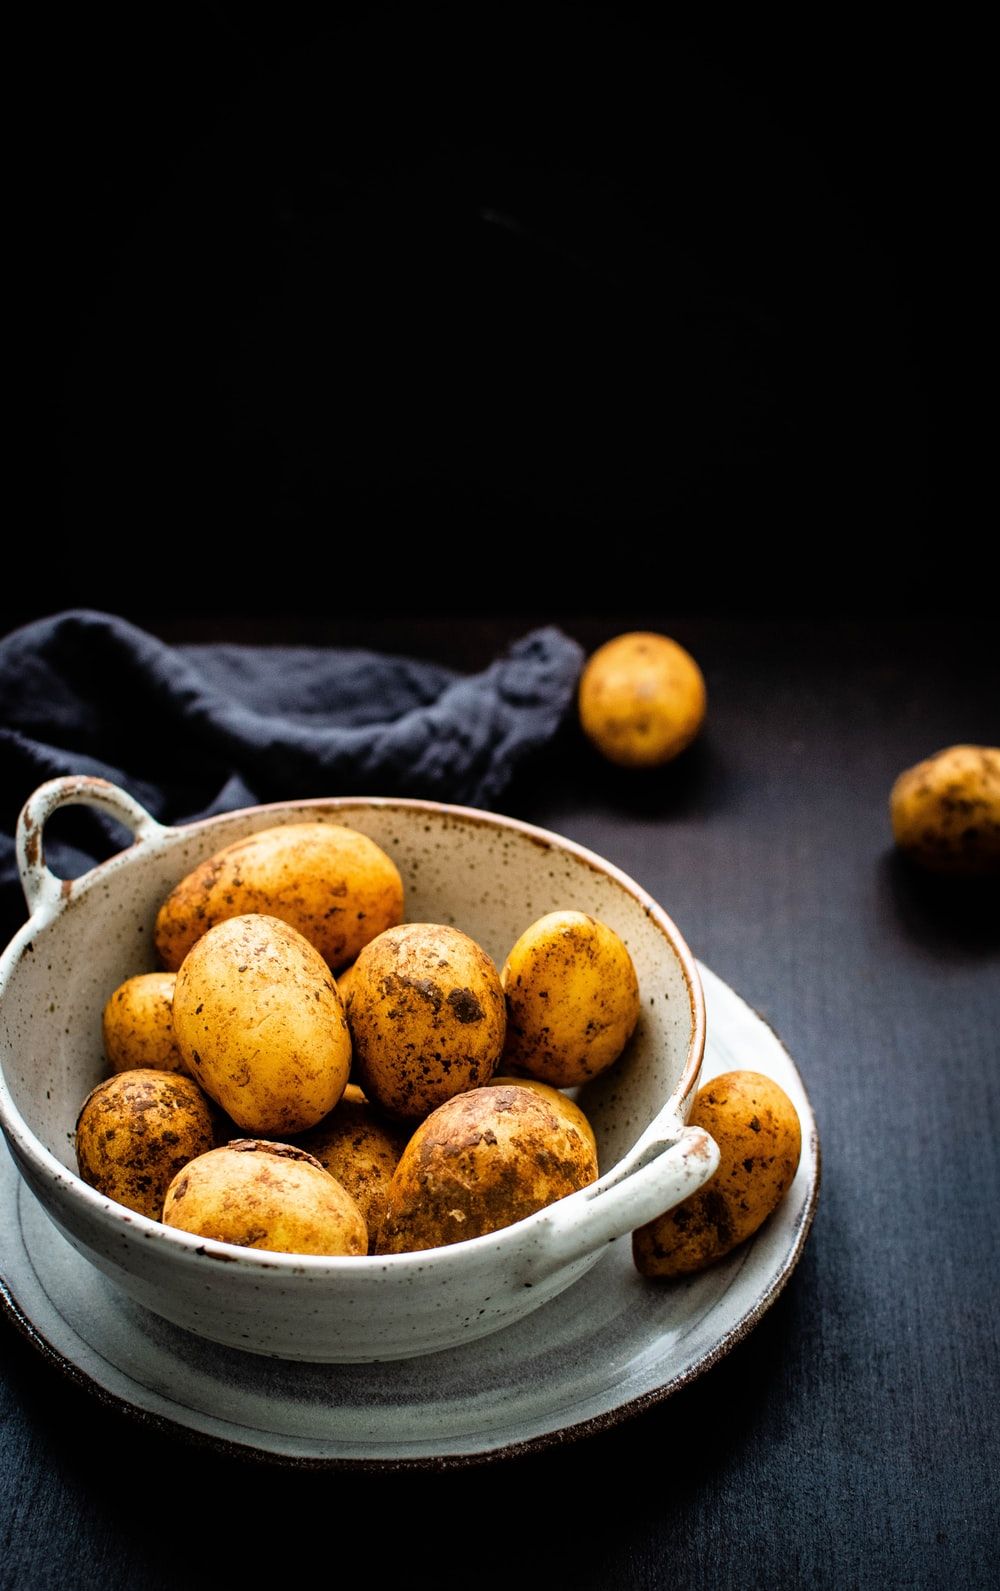 Potato Picture. Download Free Image